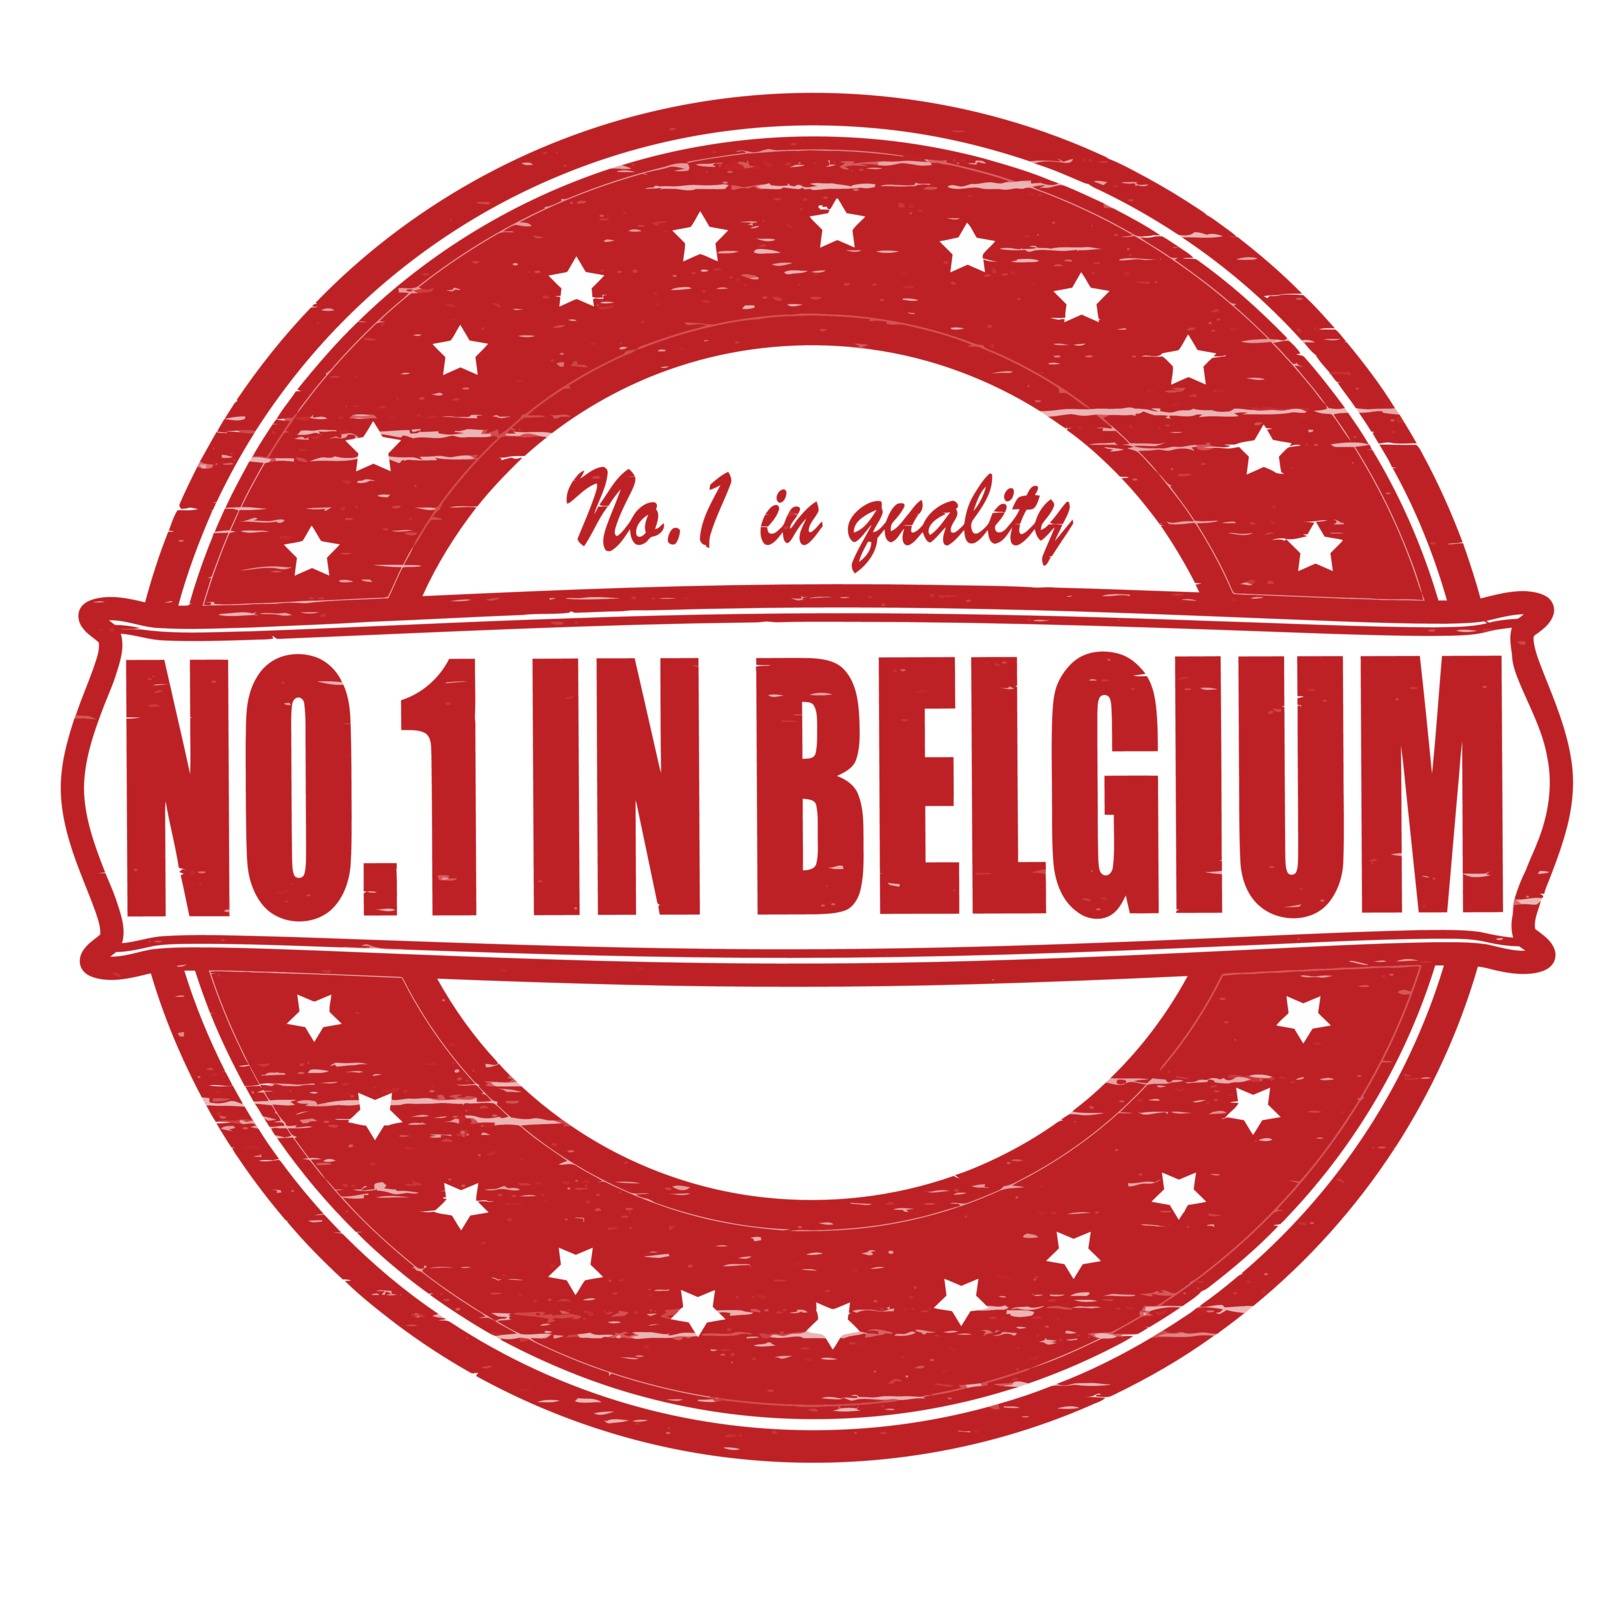 No one in Belgium by carmenbobo